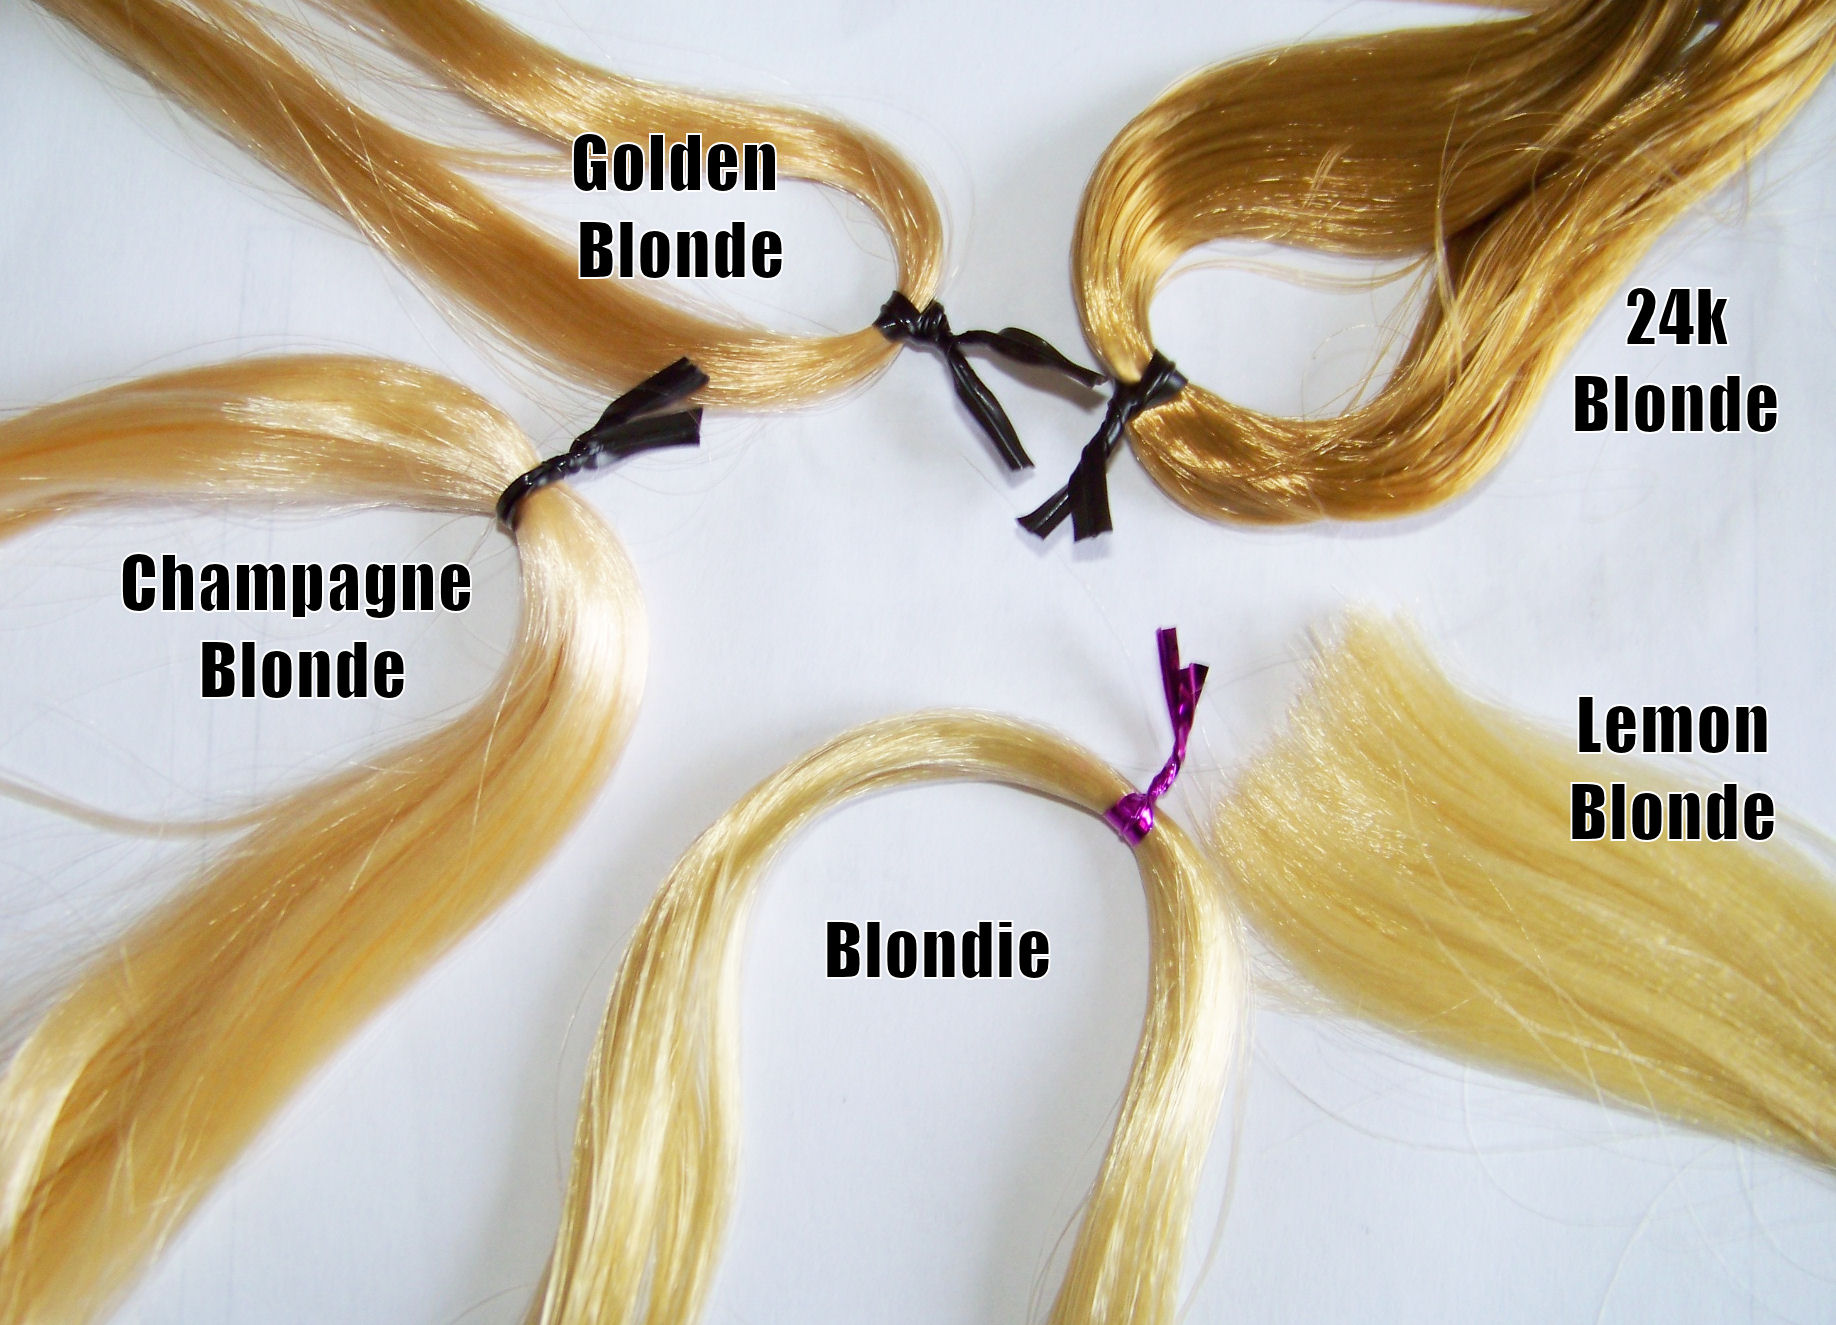 Blondie compared photo blondecomparedwithotherblondes.jpg